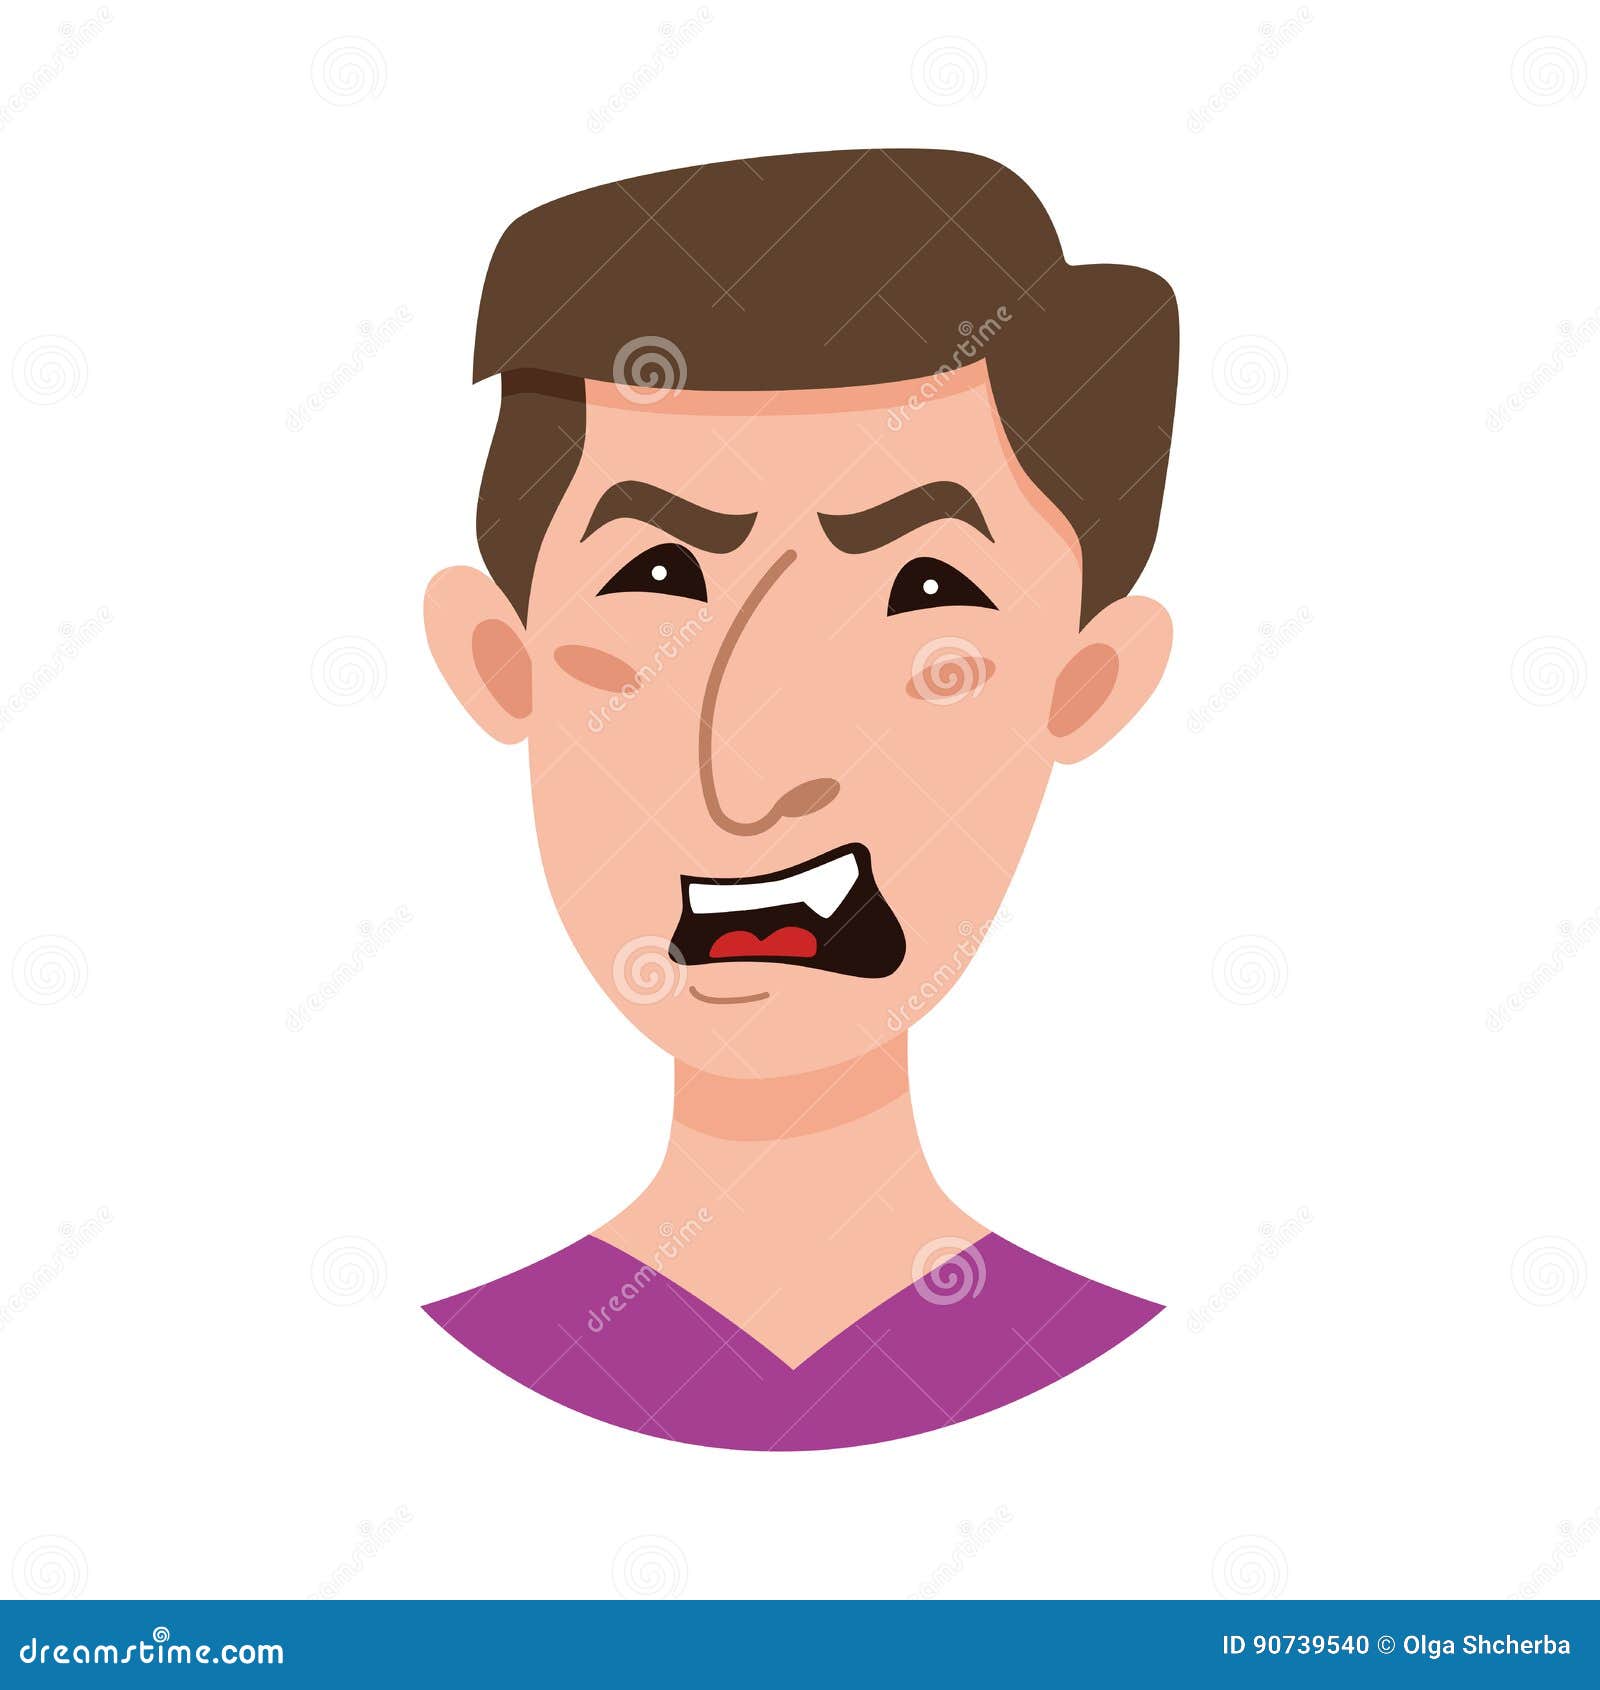 Male Emoji Cartoon Character. Stock Vector - Illustration of male, flat ...